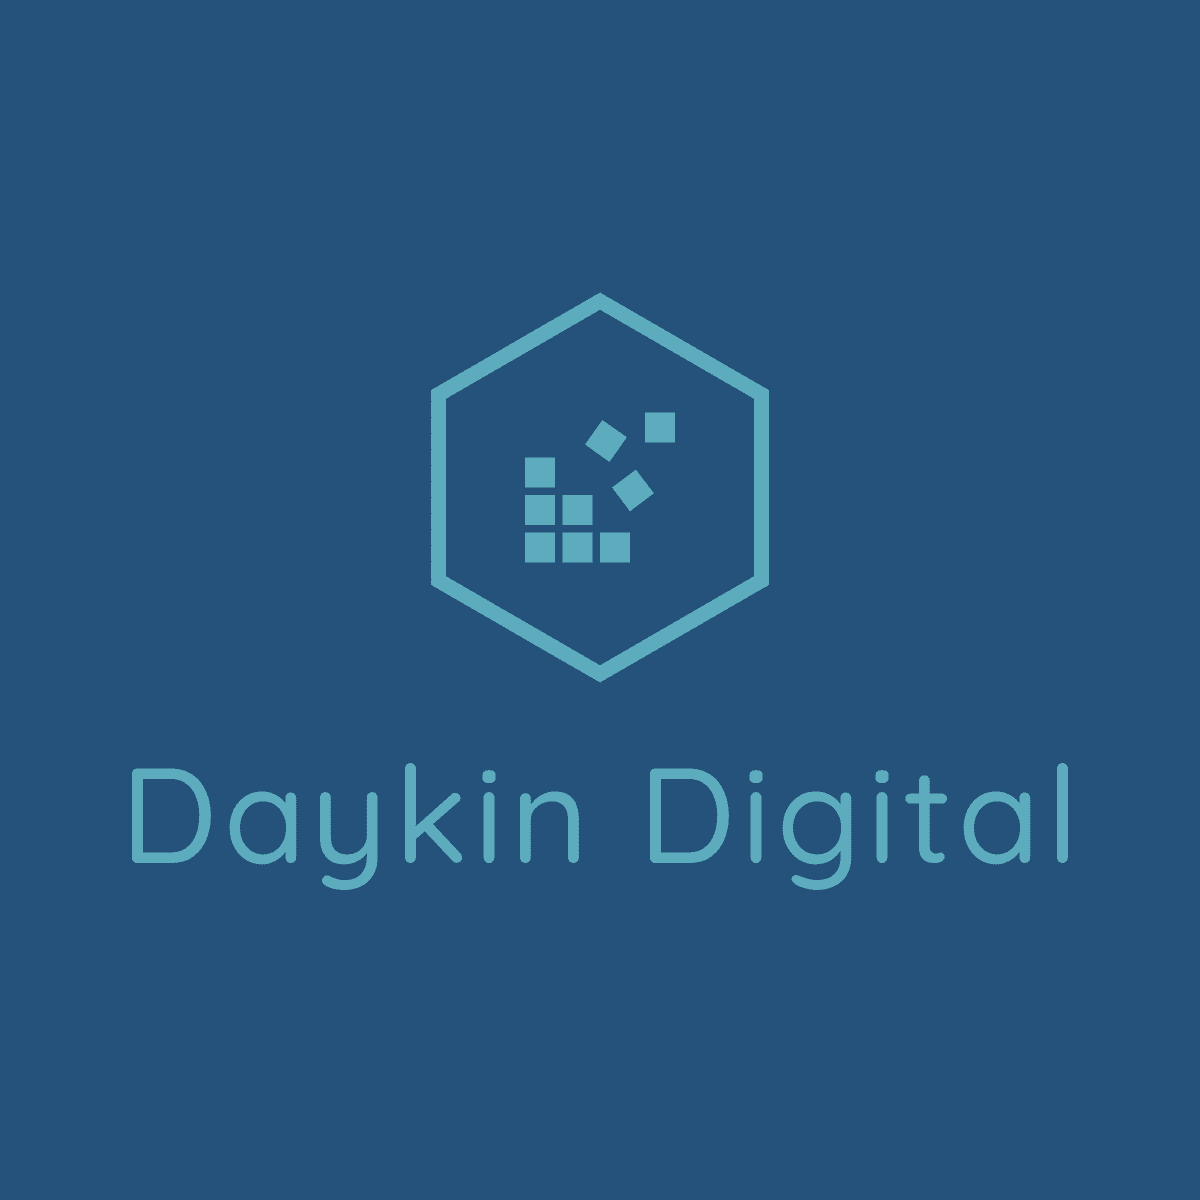 Daykin Digital | Internet marketing consulting in Prince George BC